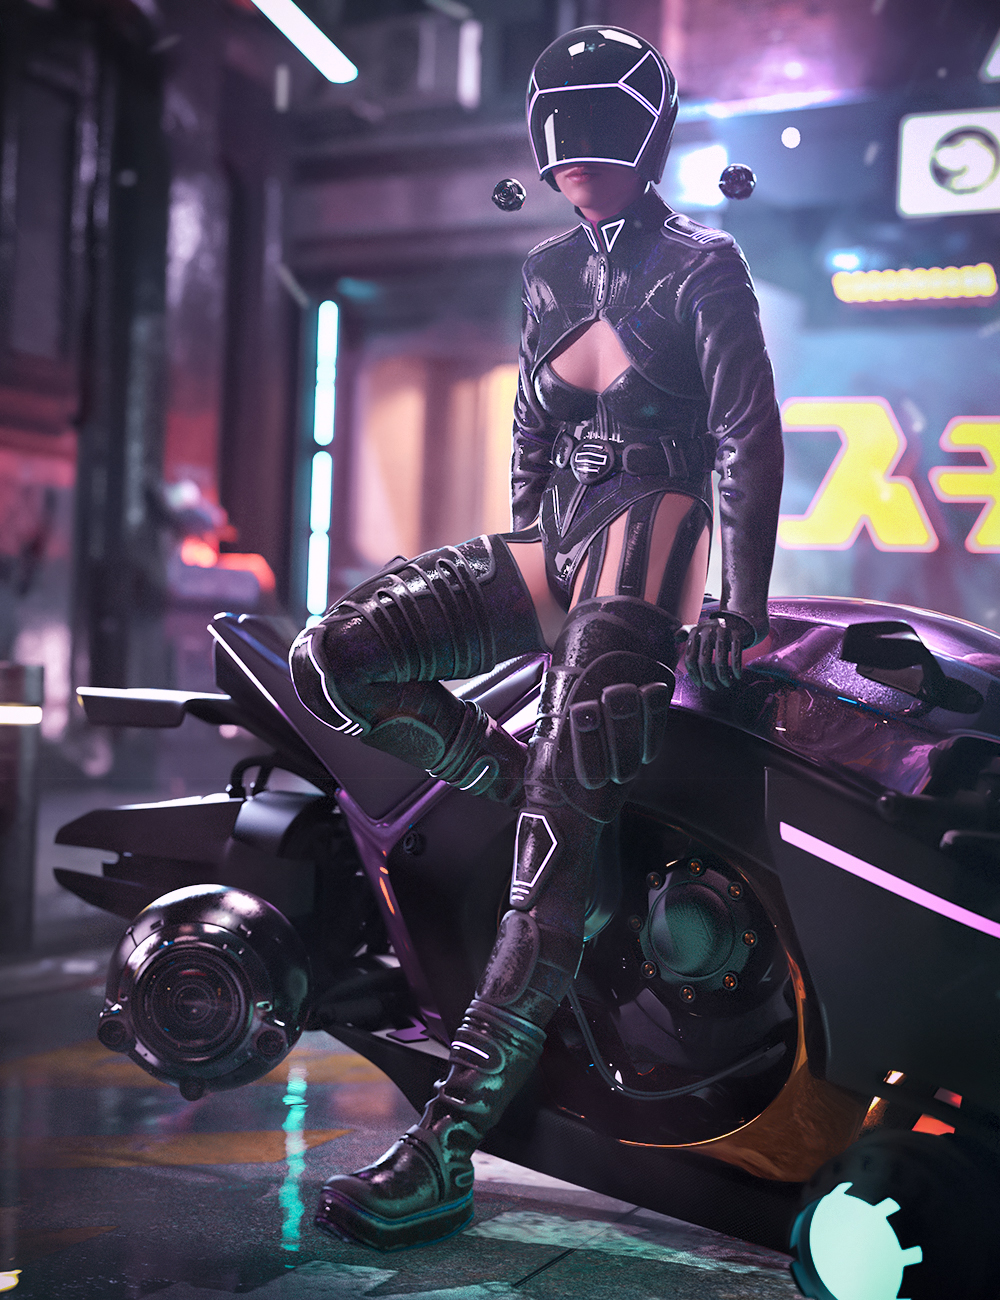 Sci-fi Rebel Rider Outfit Helmet for Genesis 8.1 Female by: Yura, 3D Models by Daz 3D